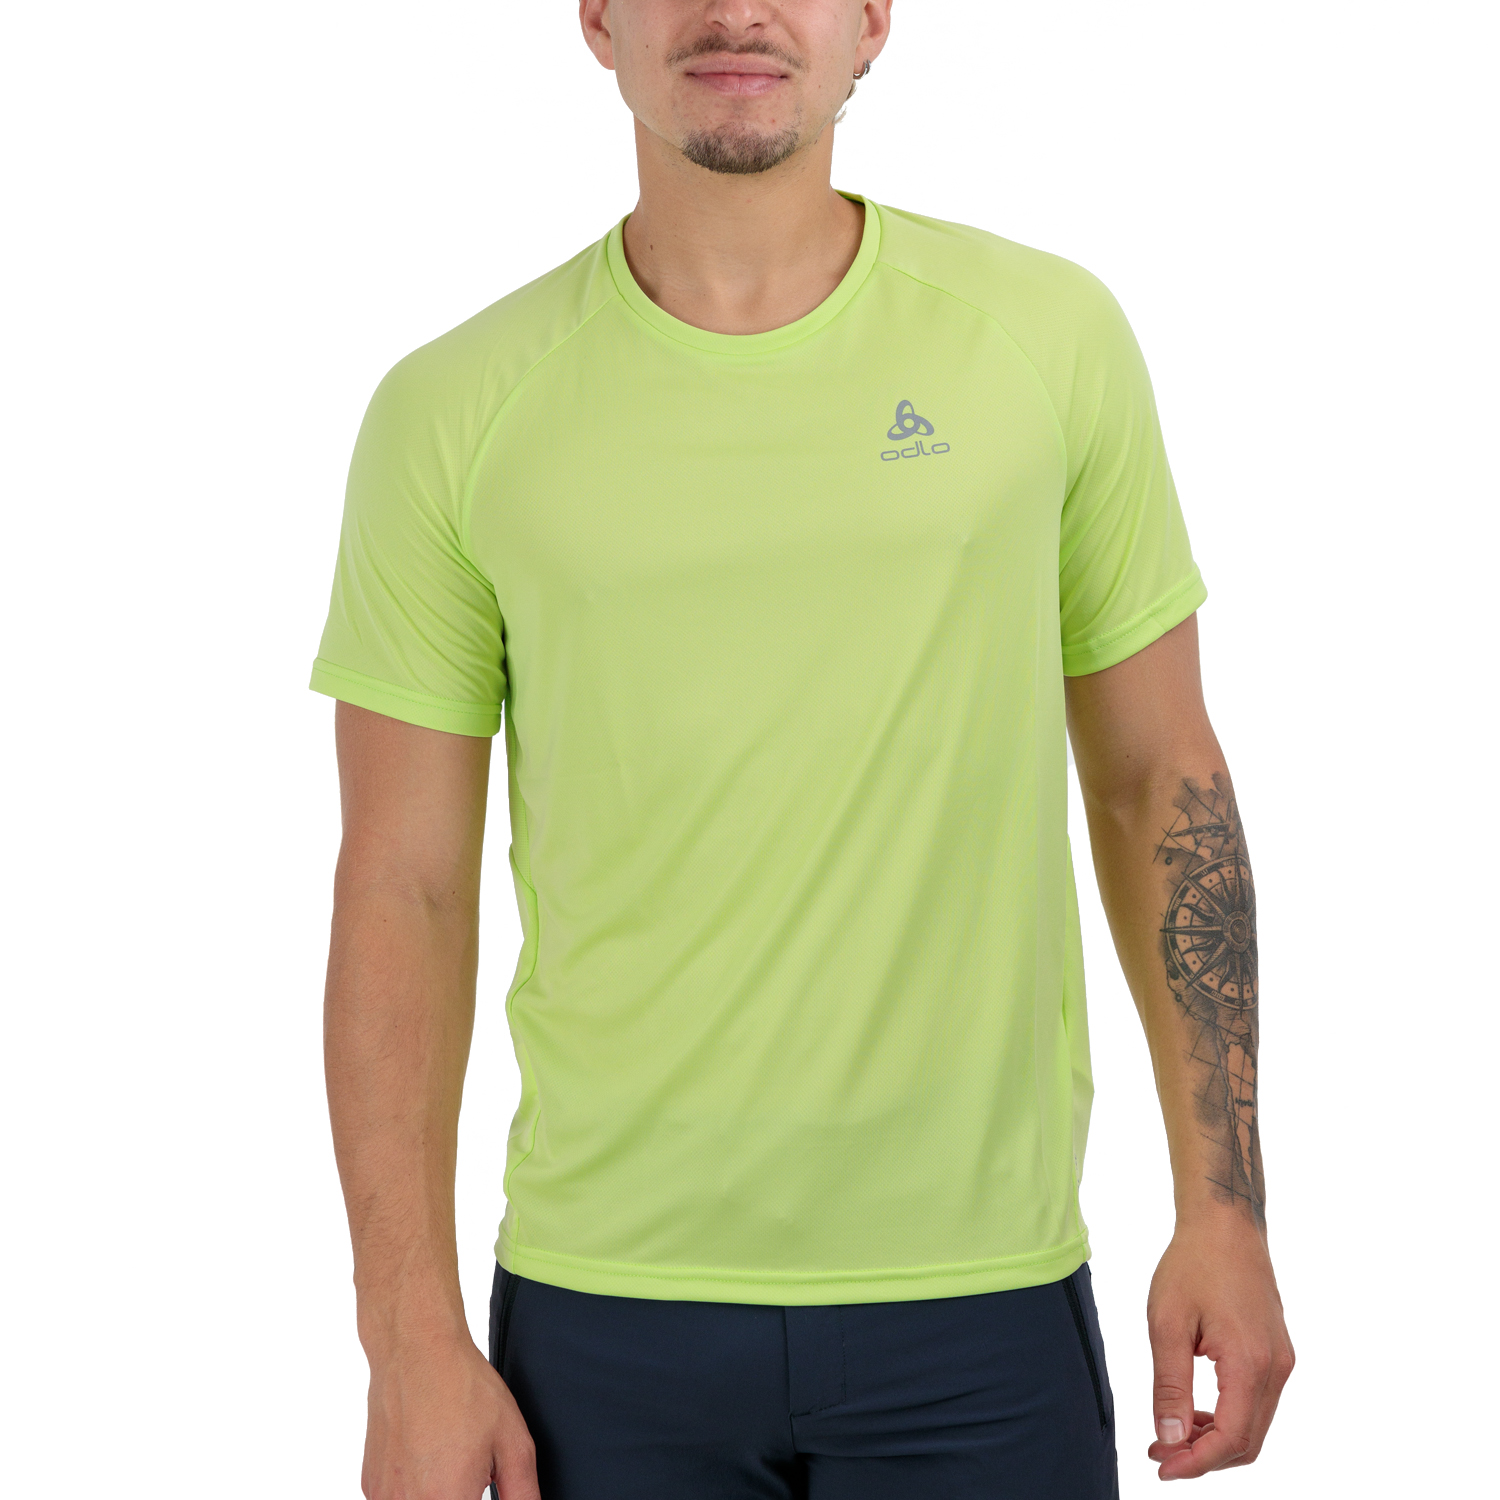 Odlo Crew Essential Chill-Tec T-Shirt - Sharp Green